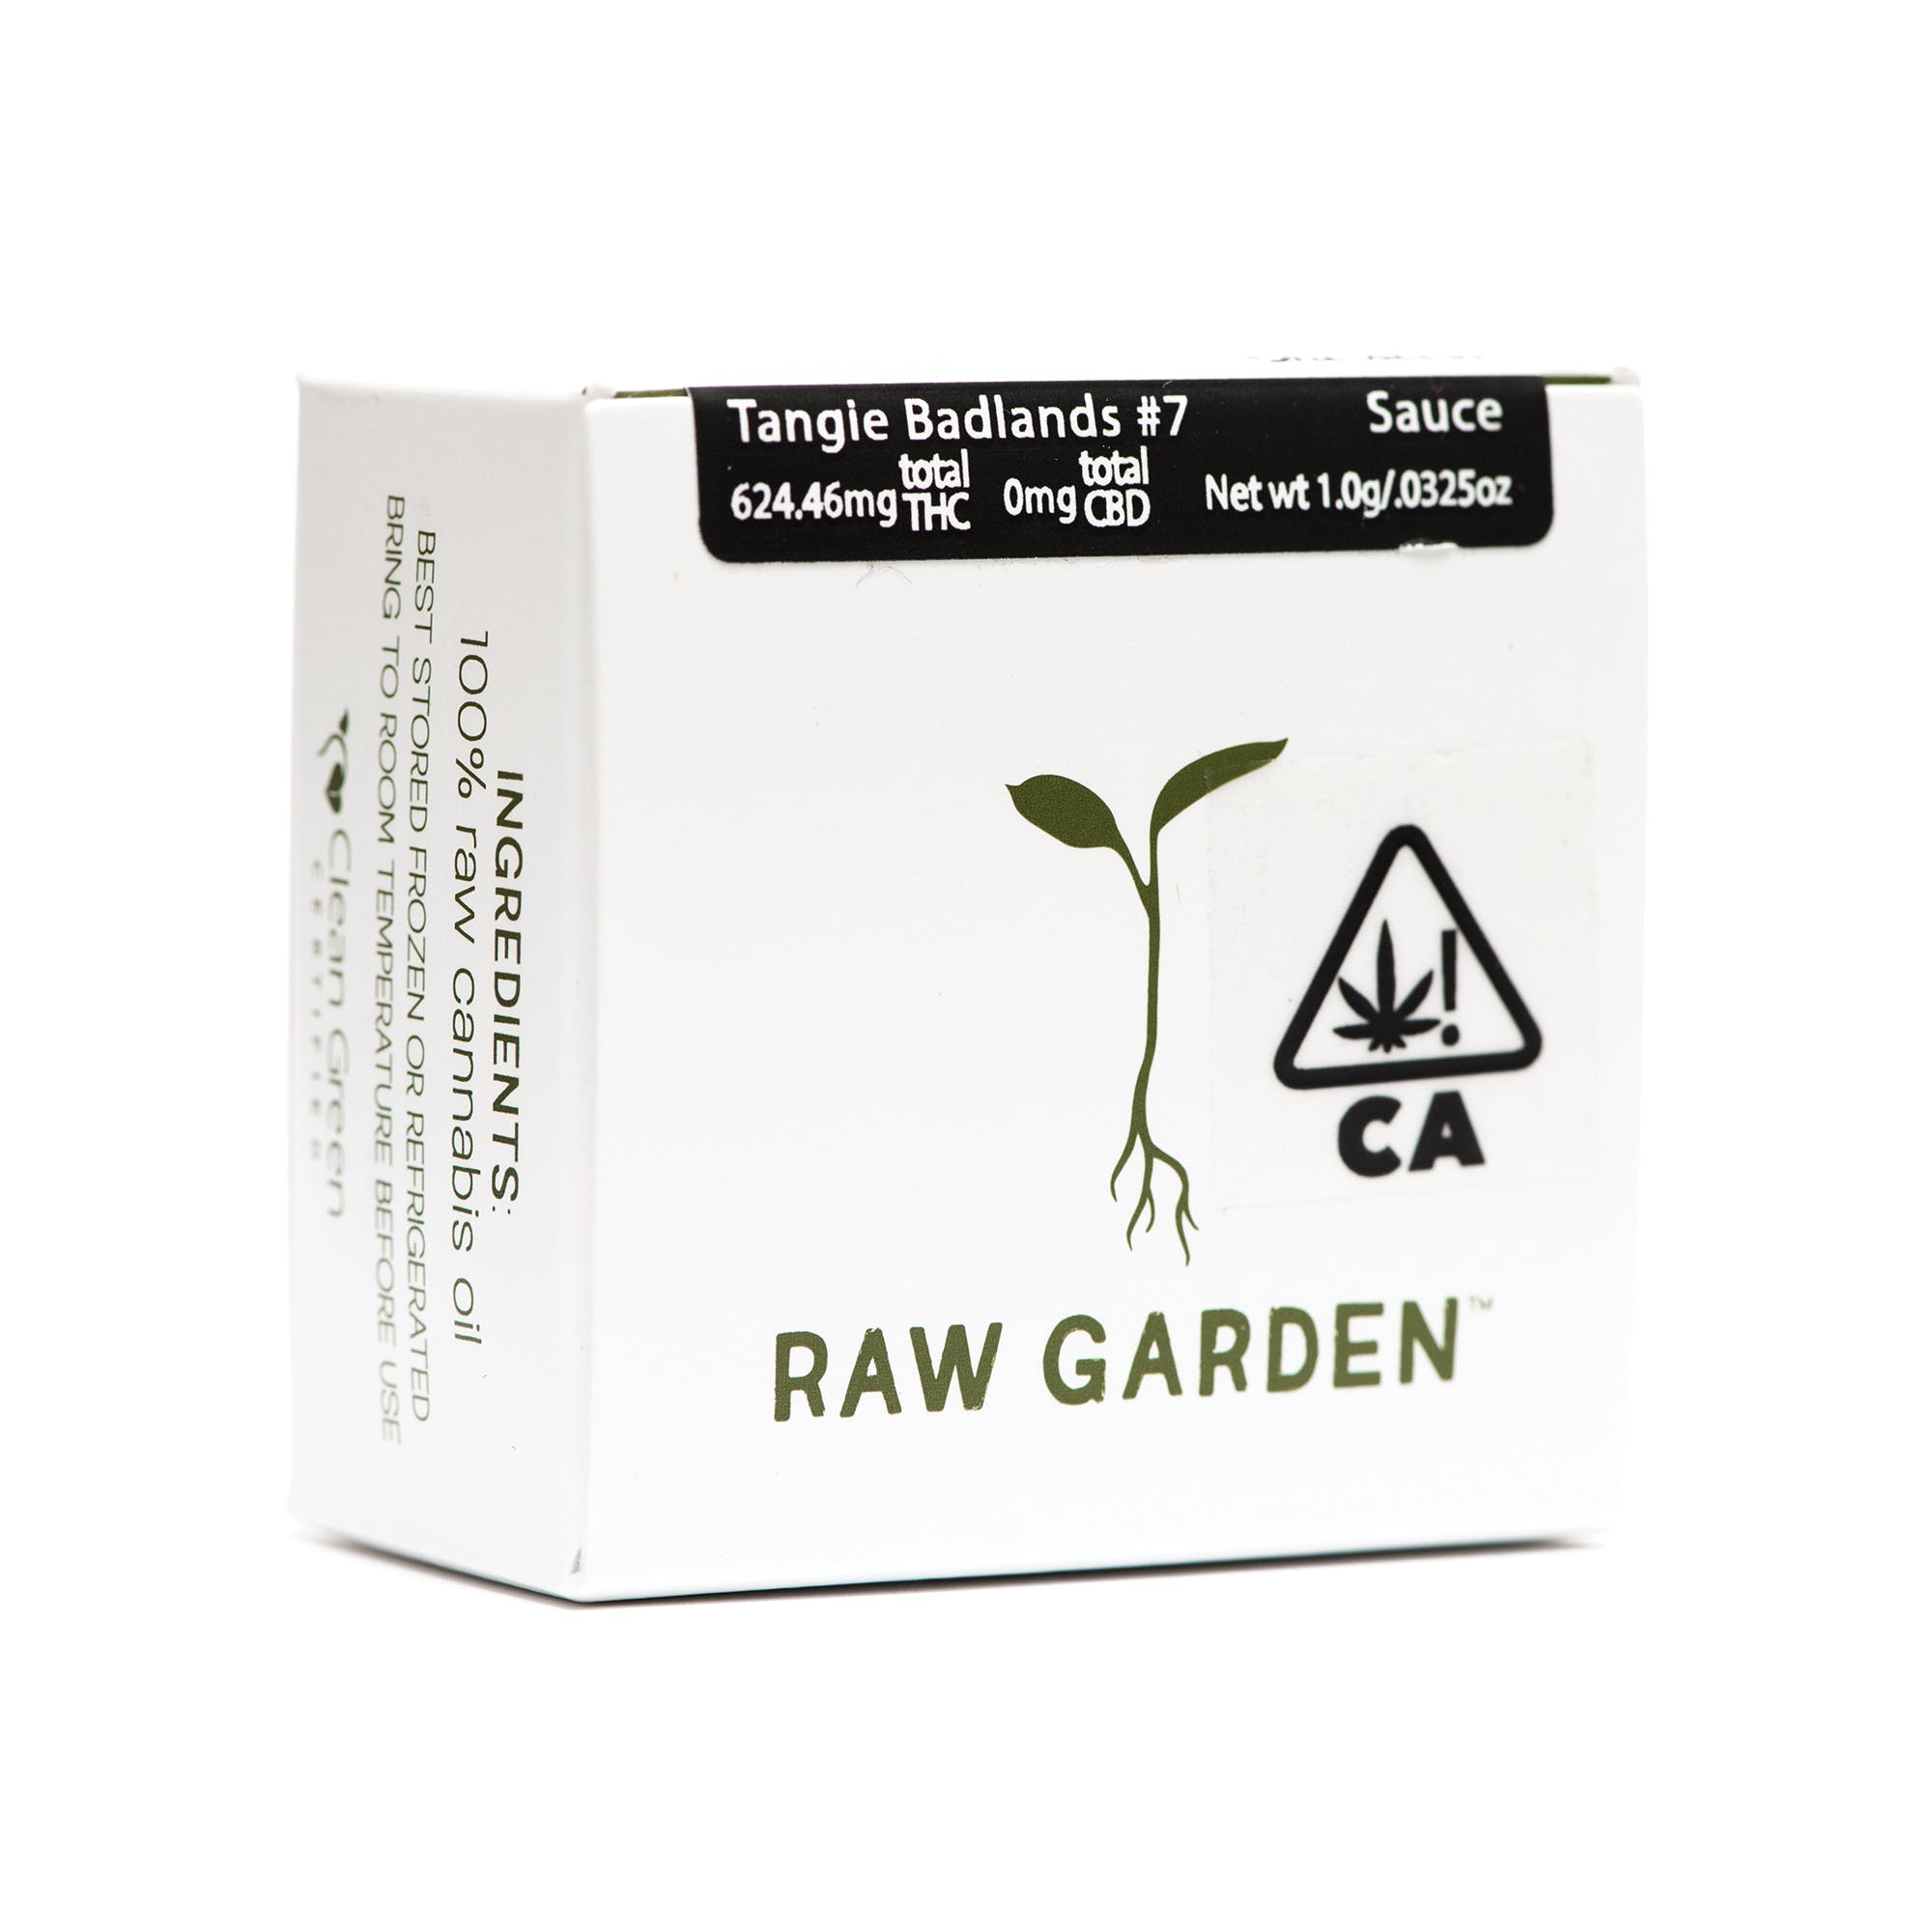 Medical/Online(21+) Raw Garden - Tangie Badlands #7 Sauce